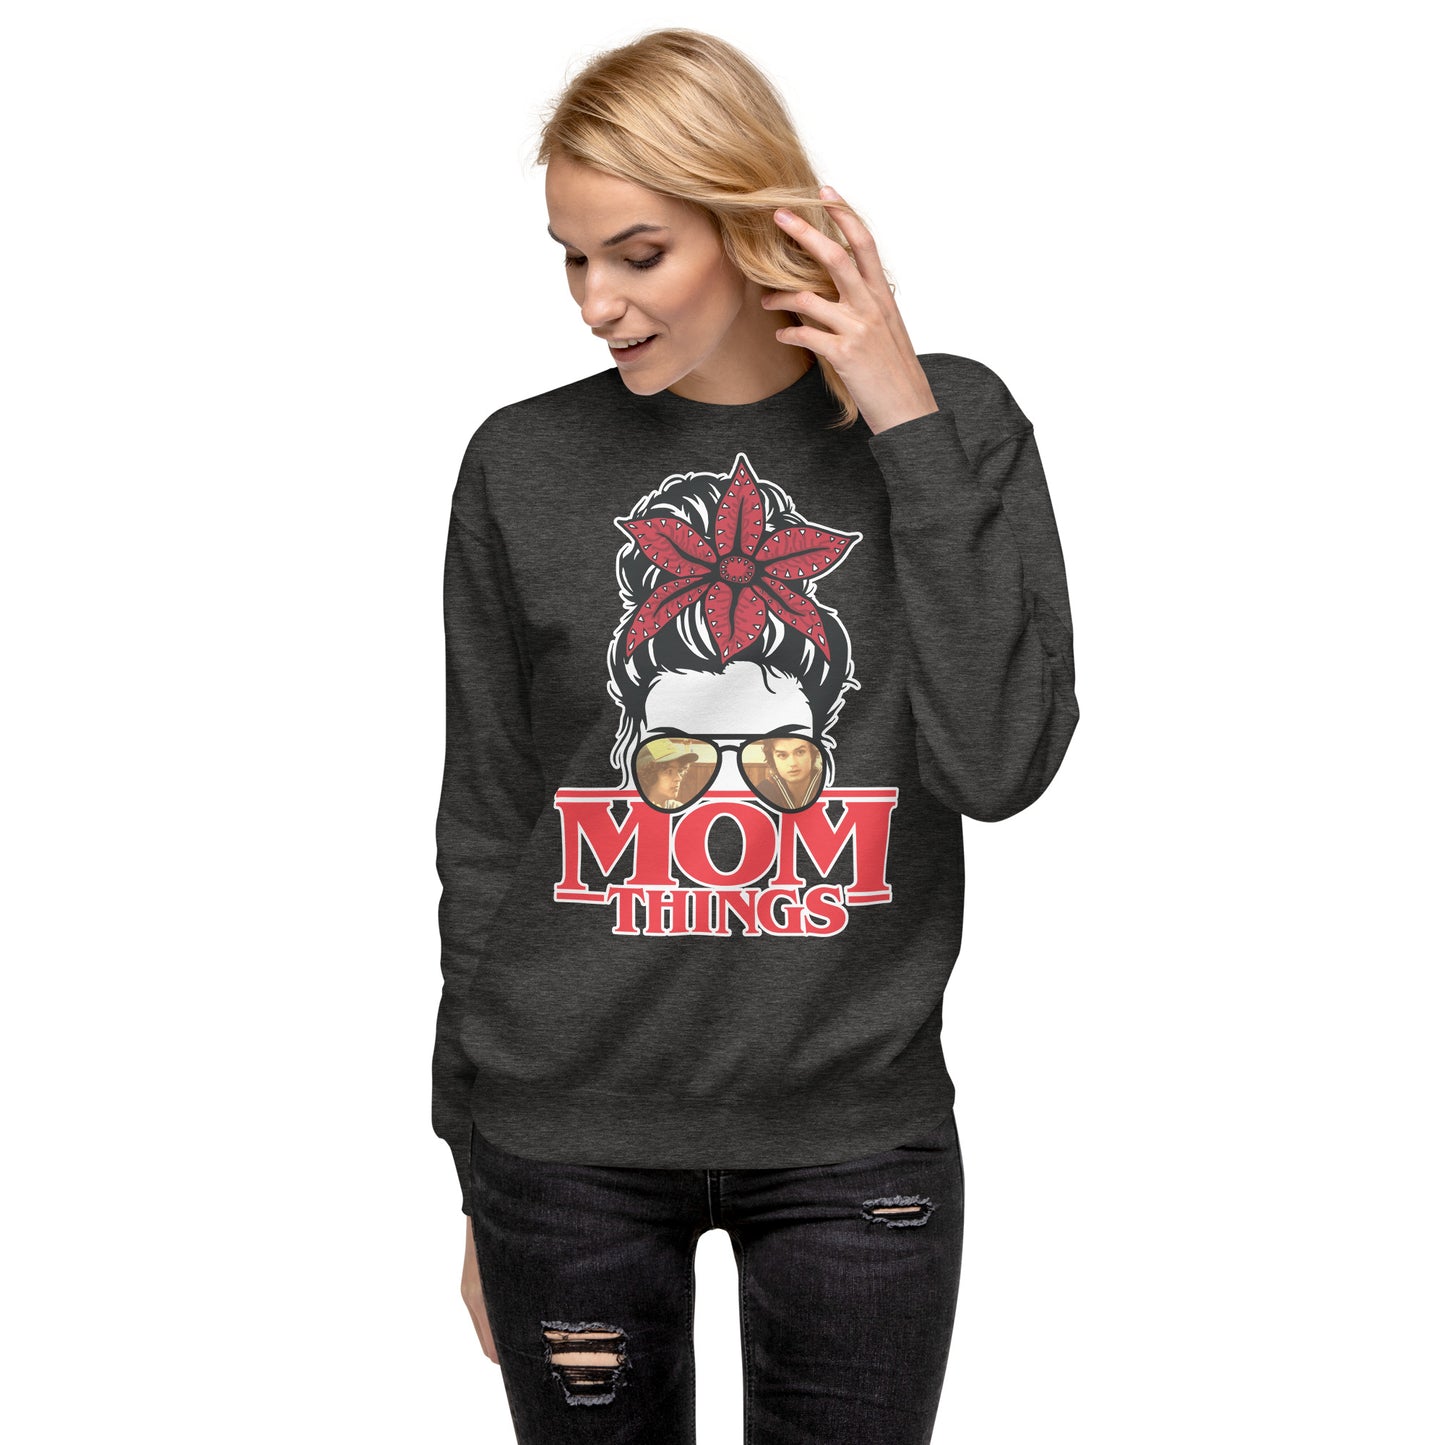 Mom Things Stranger Messy Demo Bun Steve Dustin Comfy Unisex Premium Sweatshirt